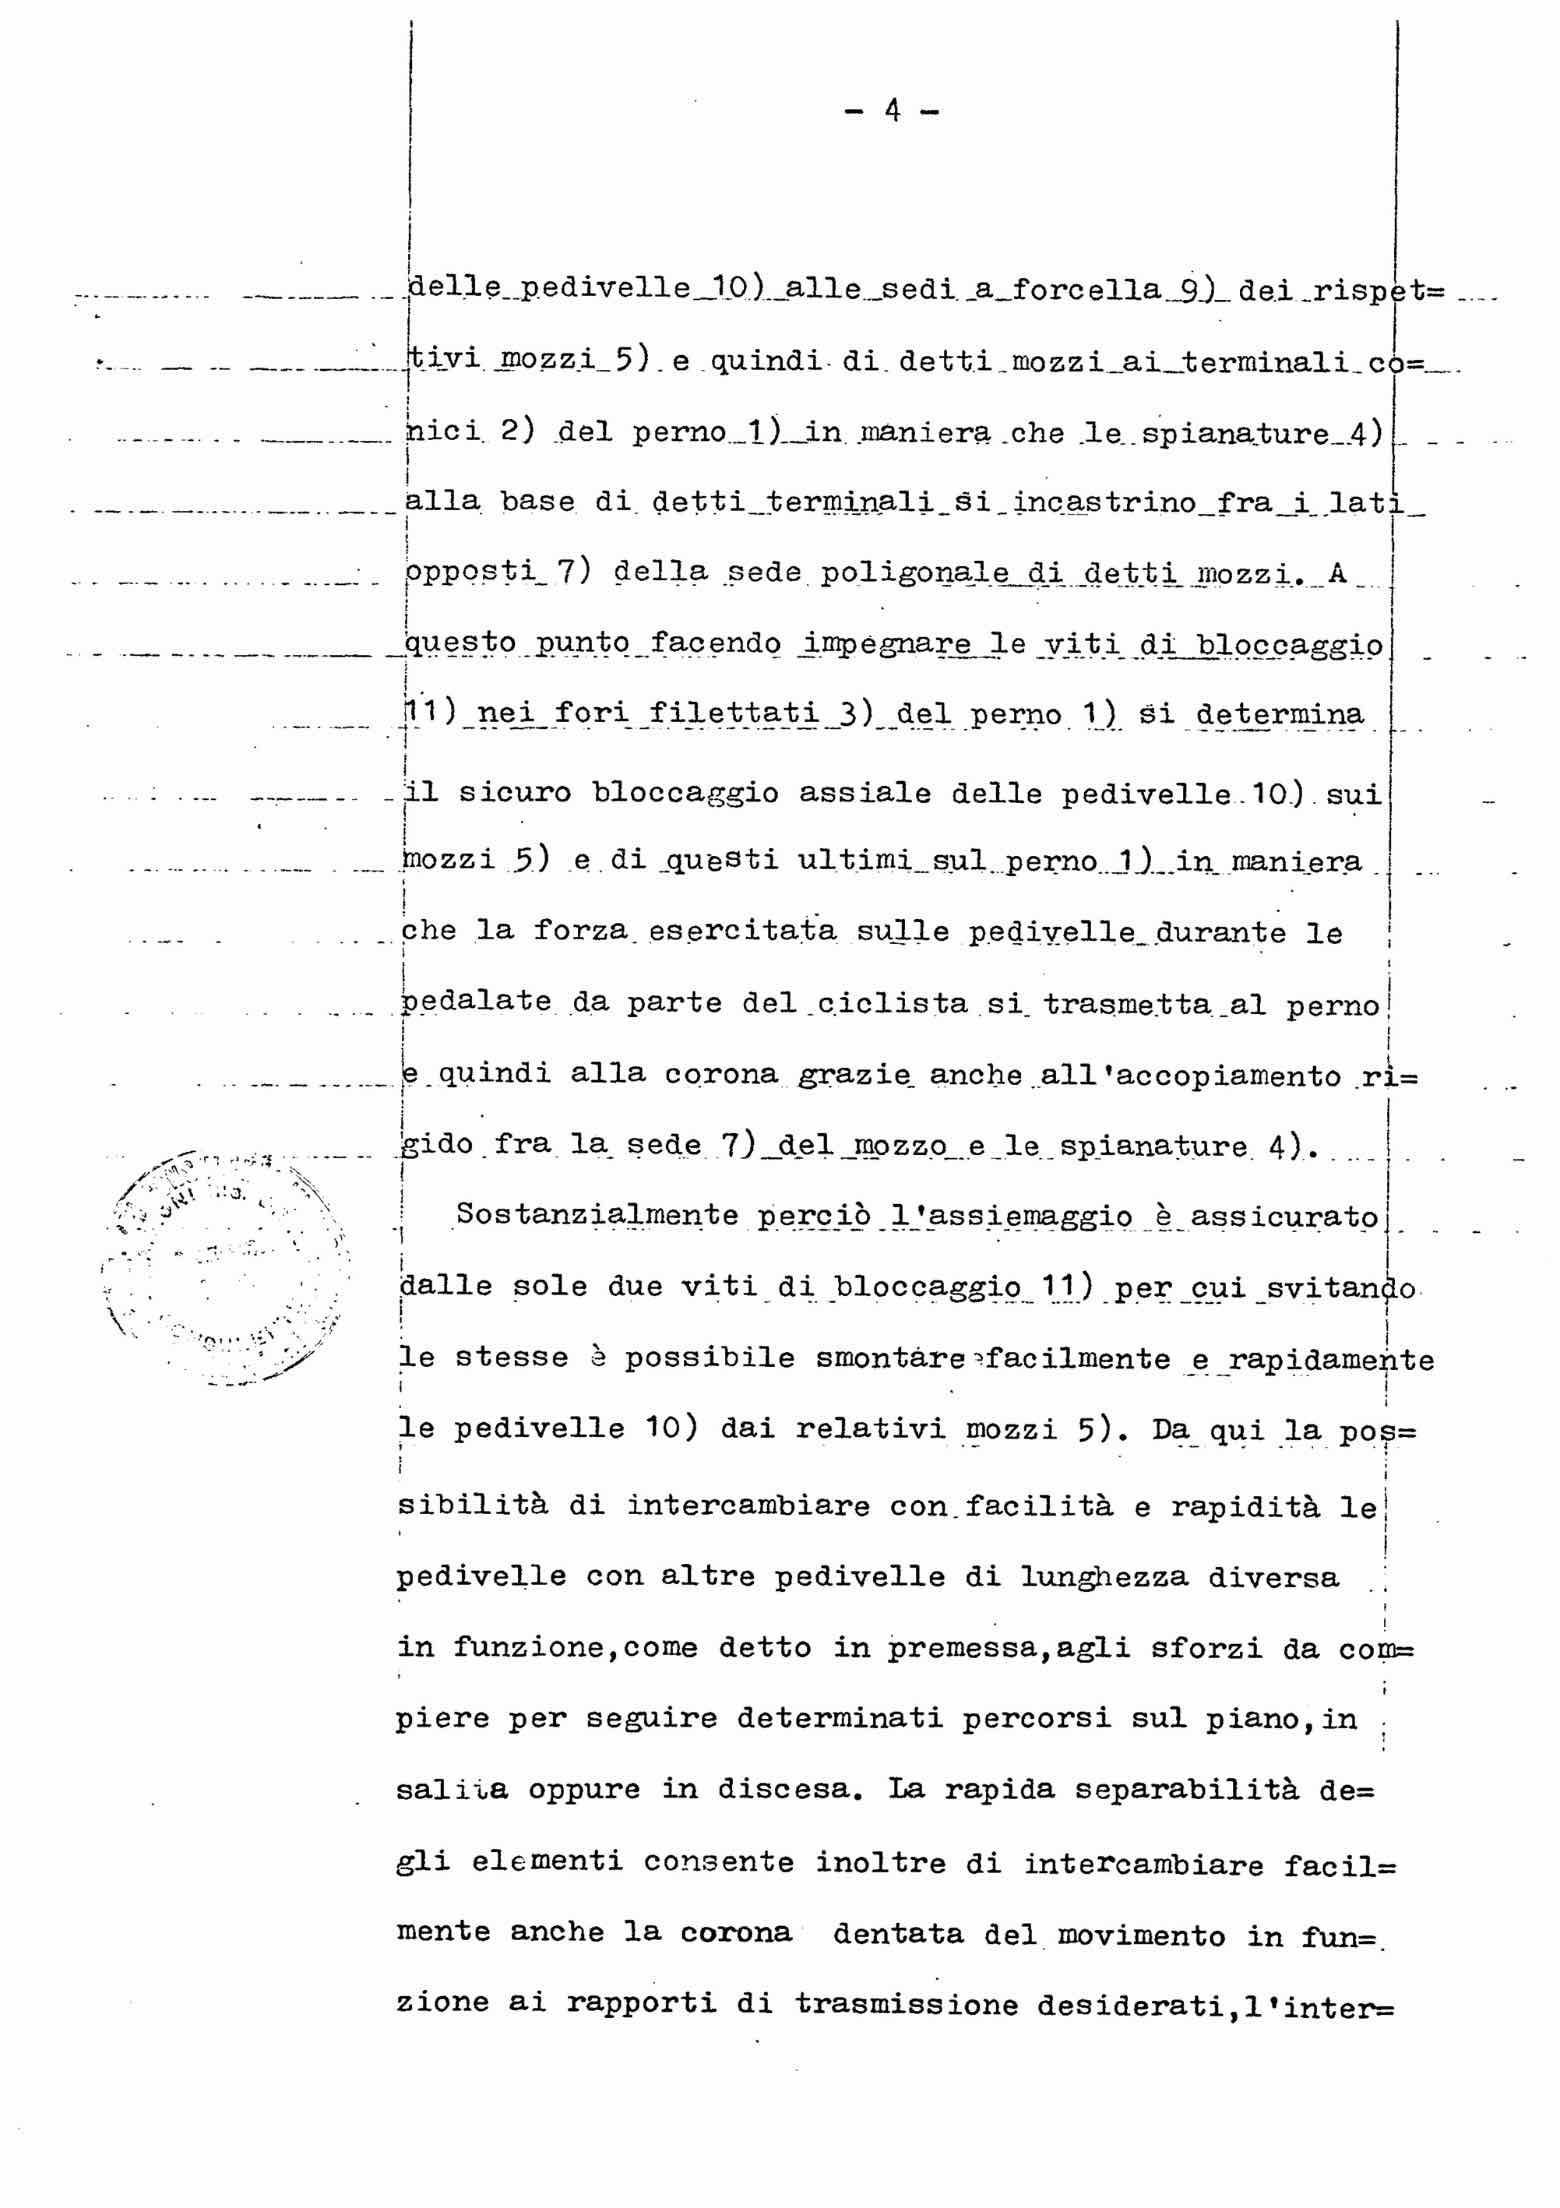 Italian Patent 1,053,056 - Ofmega scan 6 main image